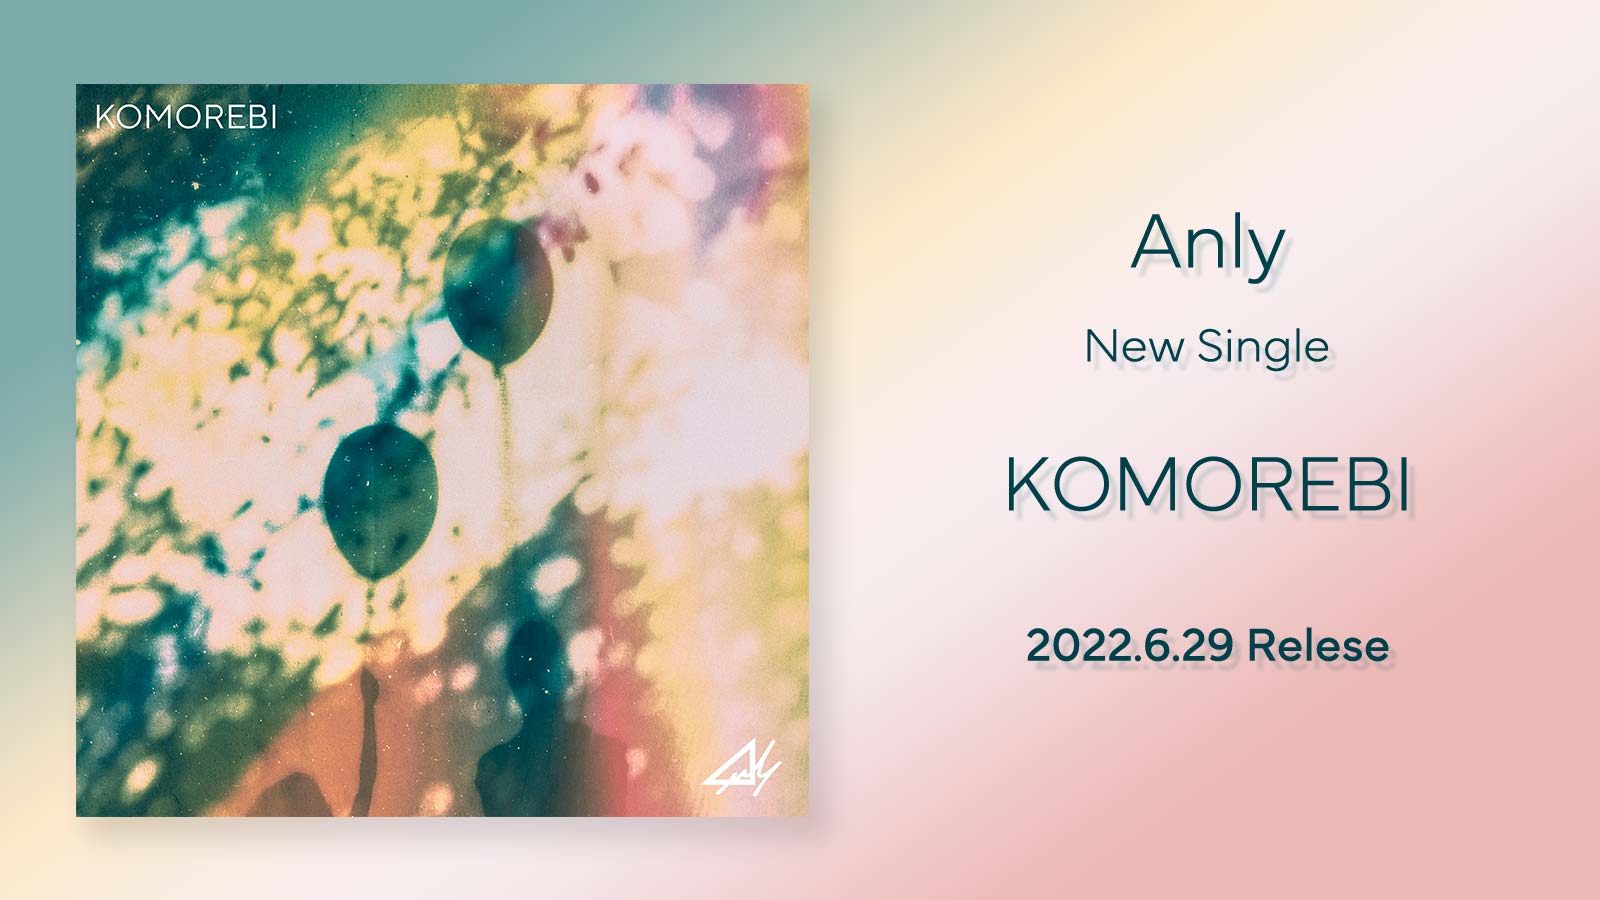 Anly New Single「KOMOREBI」 2022.6.29 Release